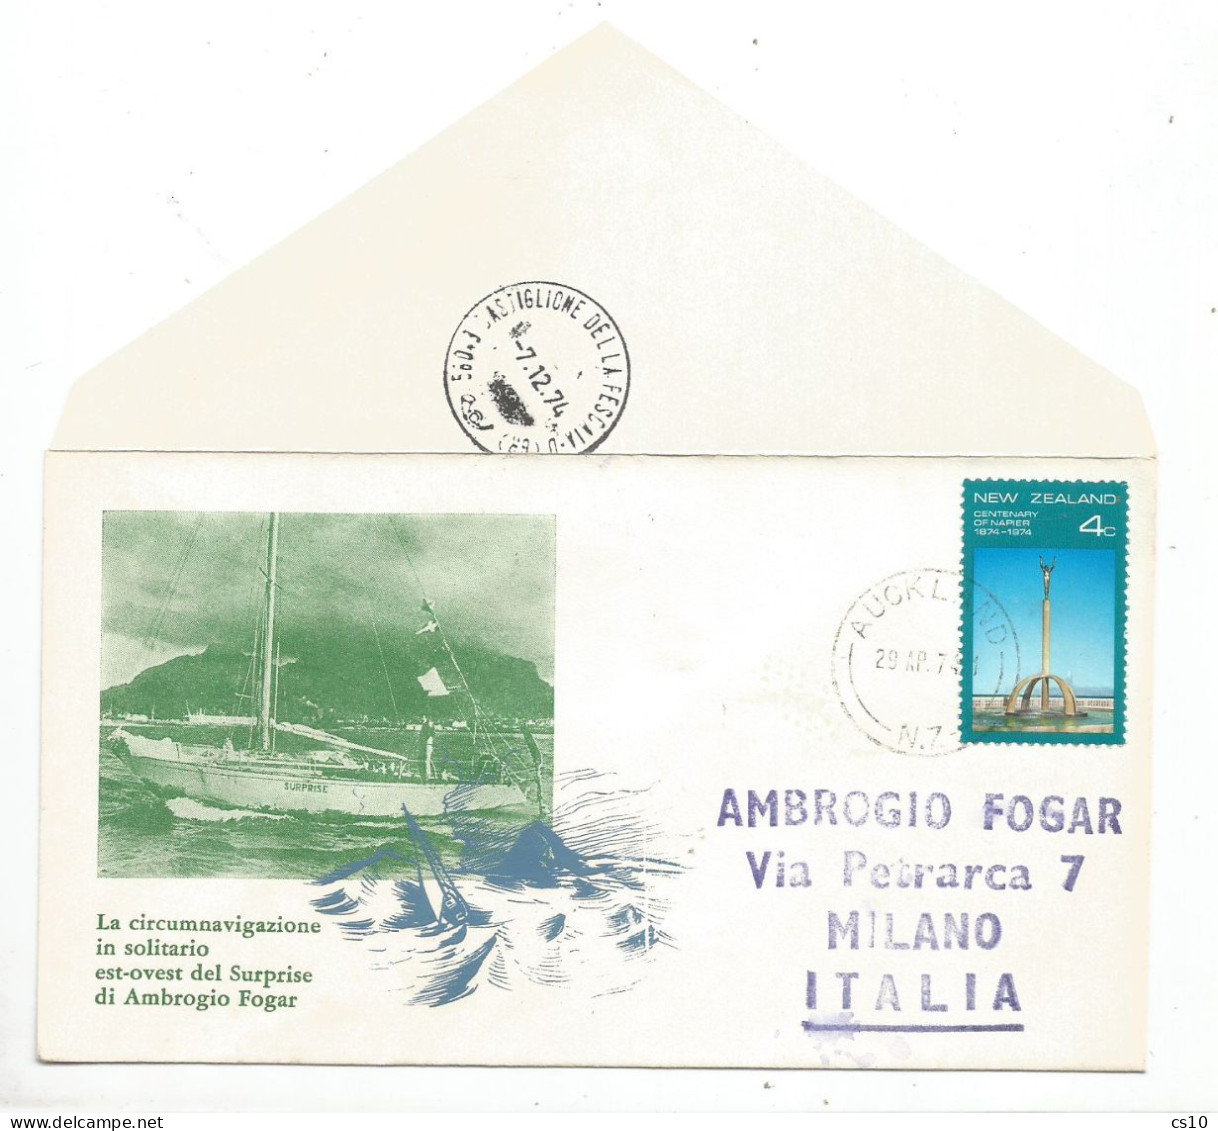 Vela Sailing SOLO Circumnavigation - Ambrogio Fogar On Surprise Yacht - Official CV Auckland 29apr1974 X Italy 7dec74 - Voile